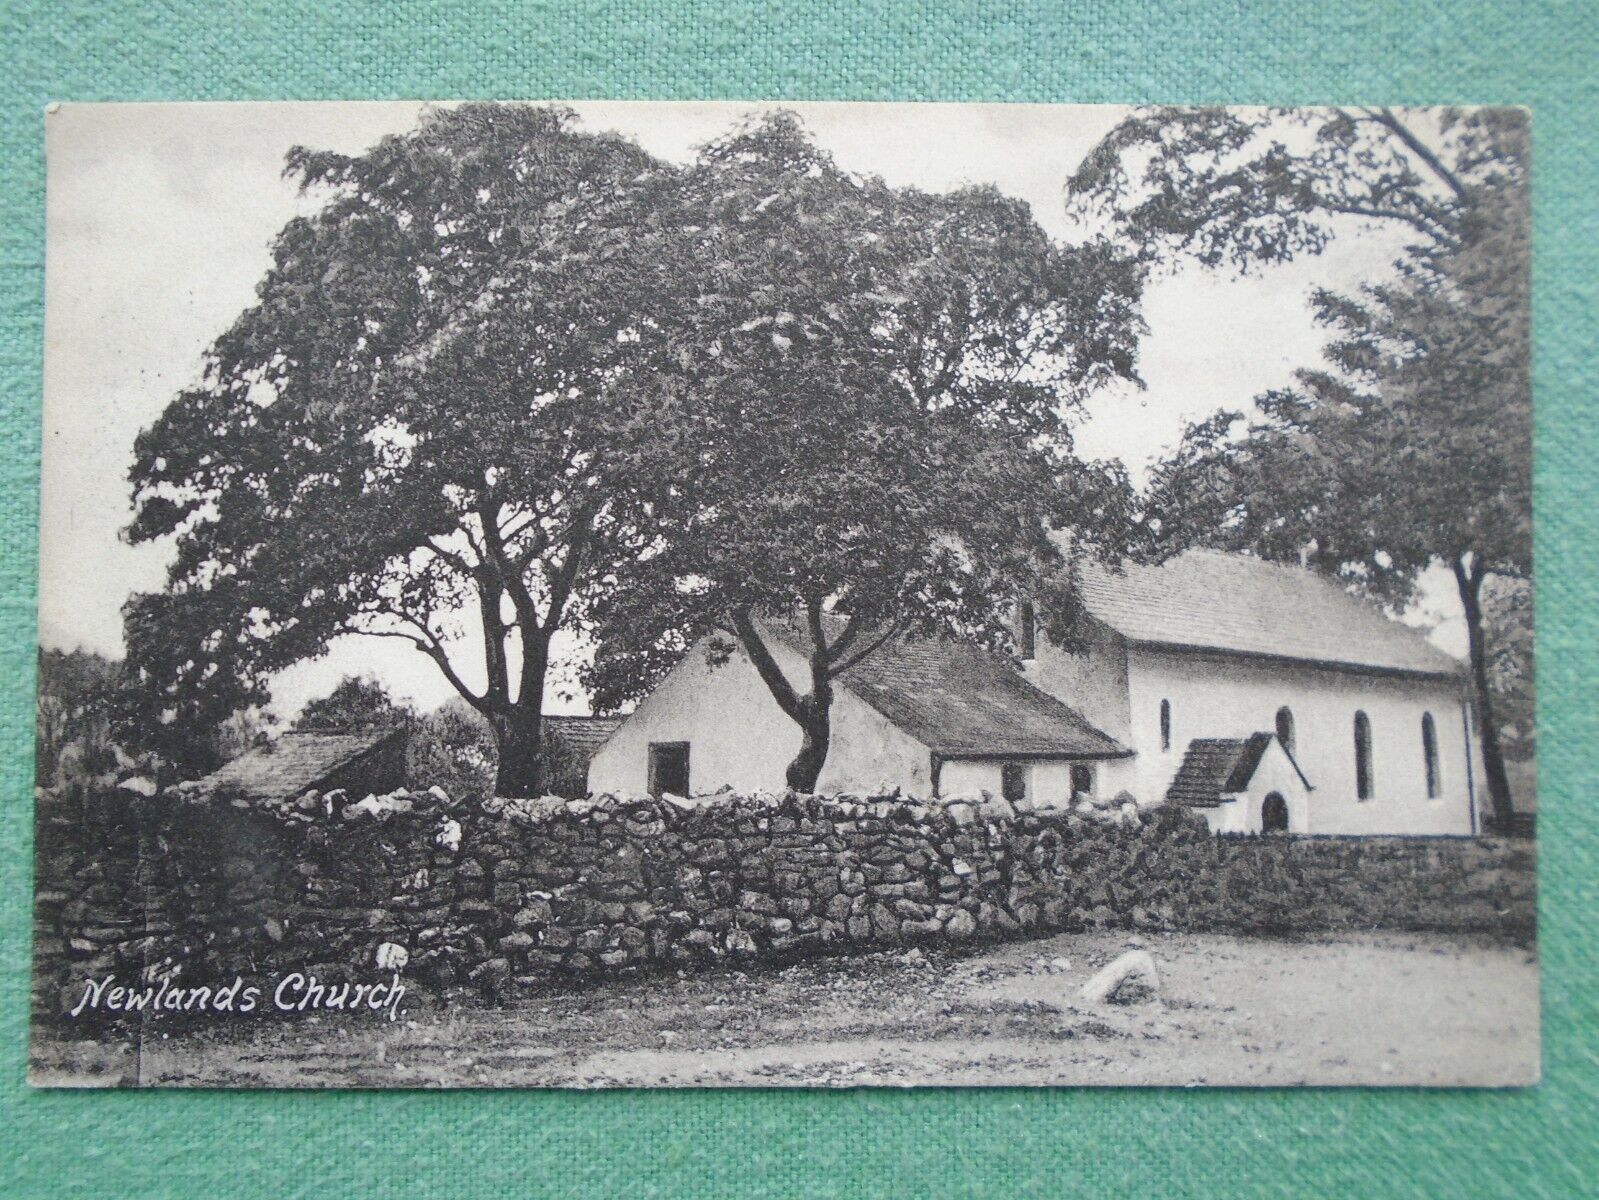 House Clearance - Service of Newlands Church Little Town Keswick Cumbria 1905